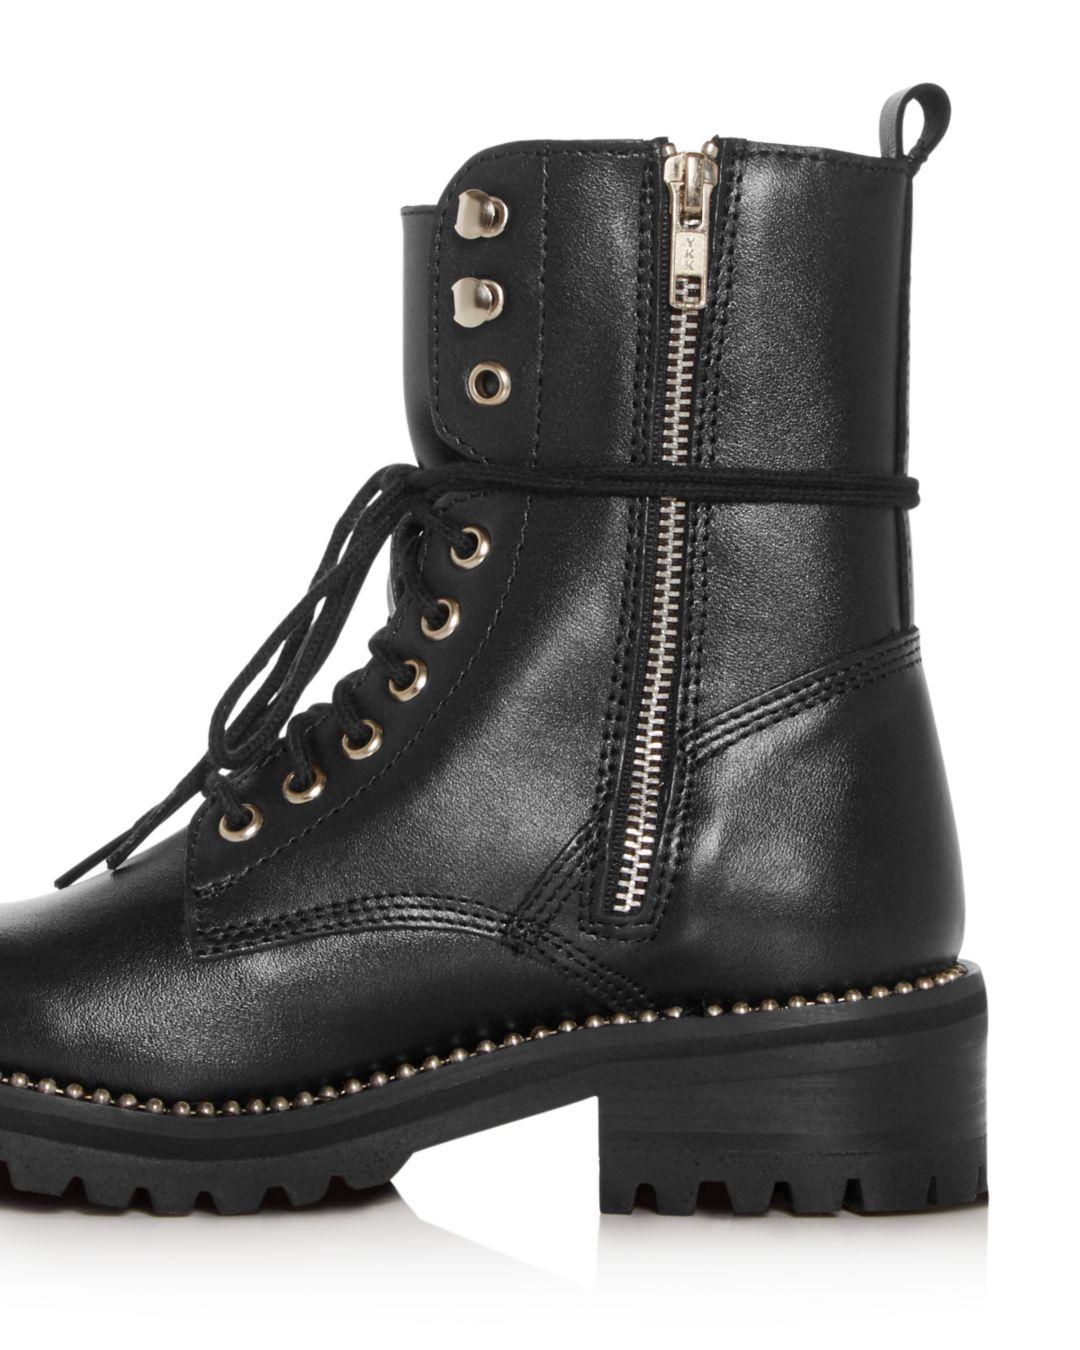 Aqua Leather Women's Jax Combat Boots in Black - Lyst